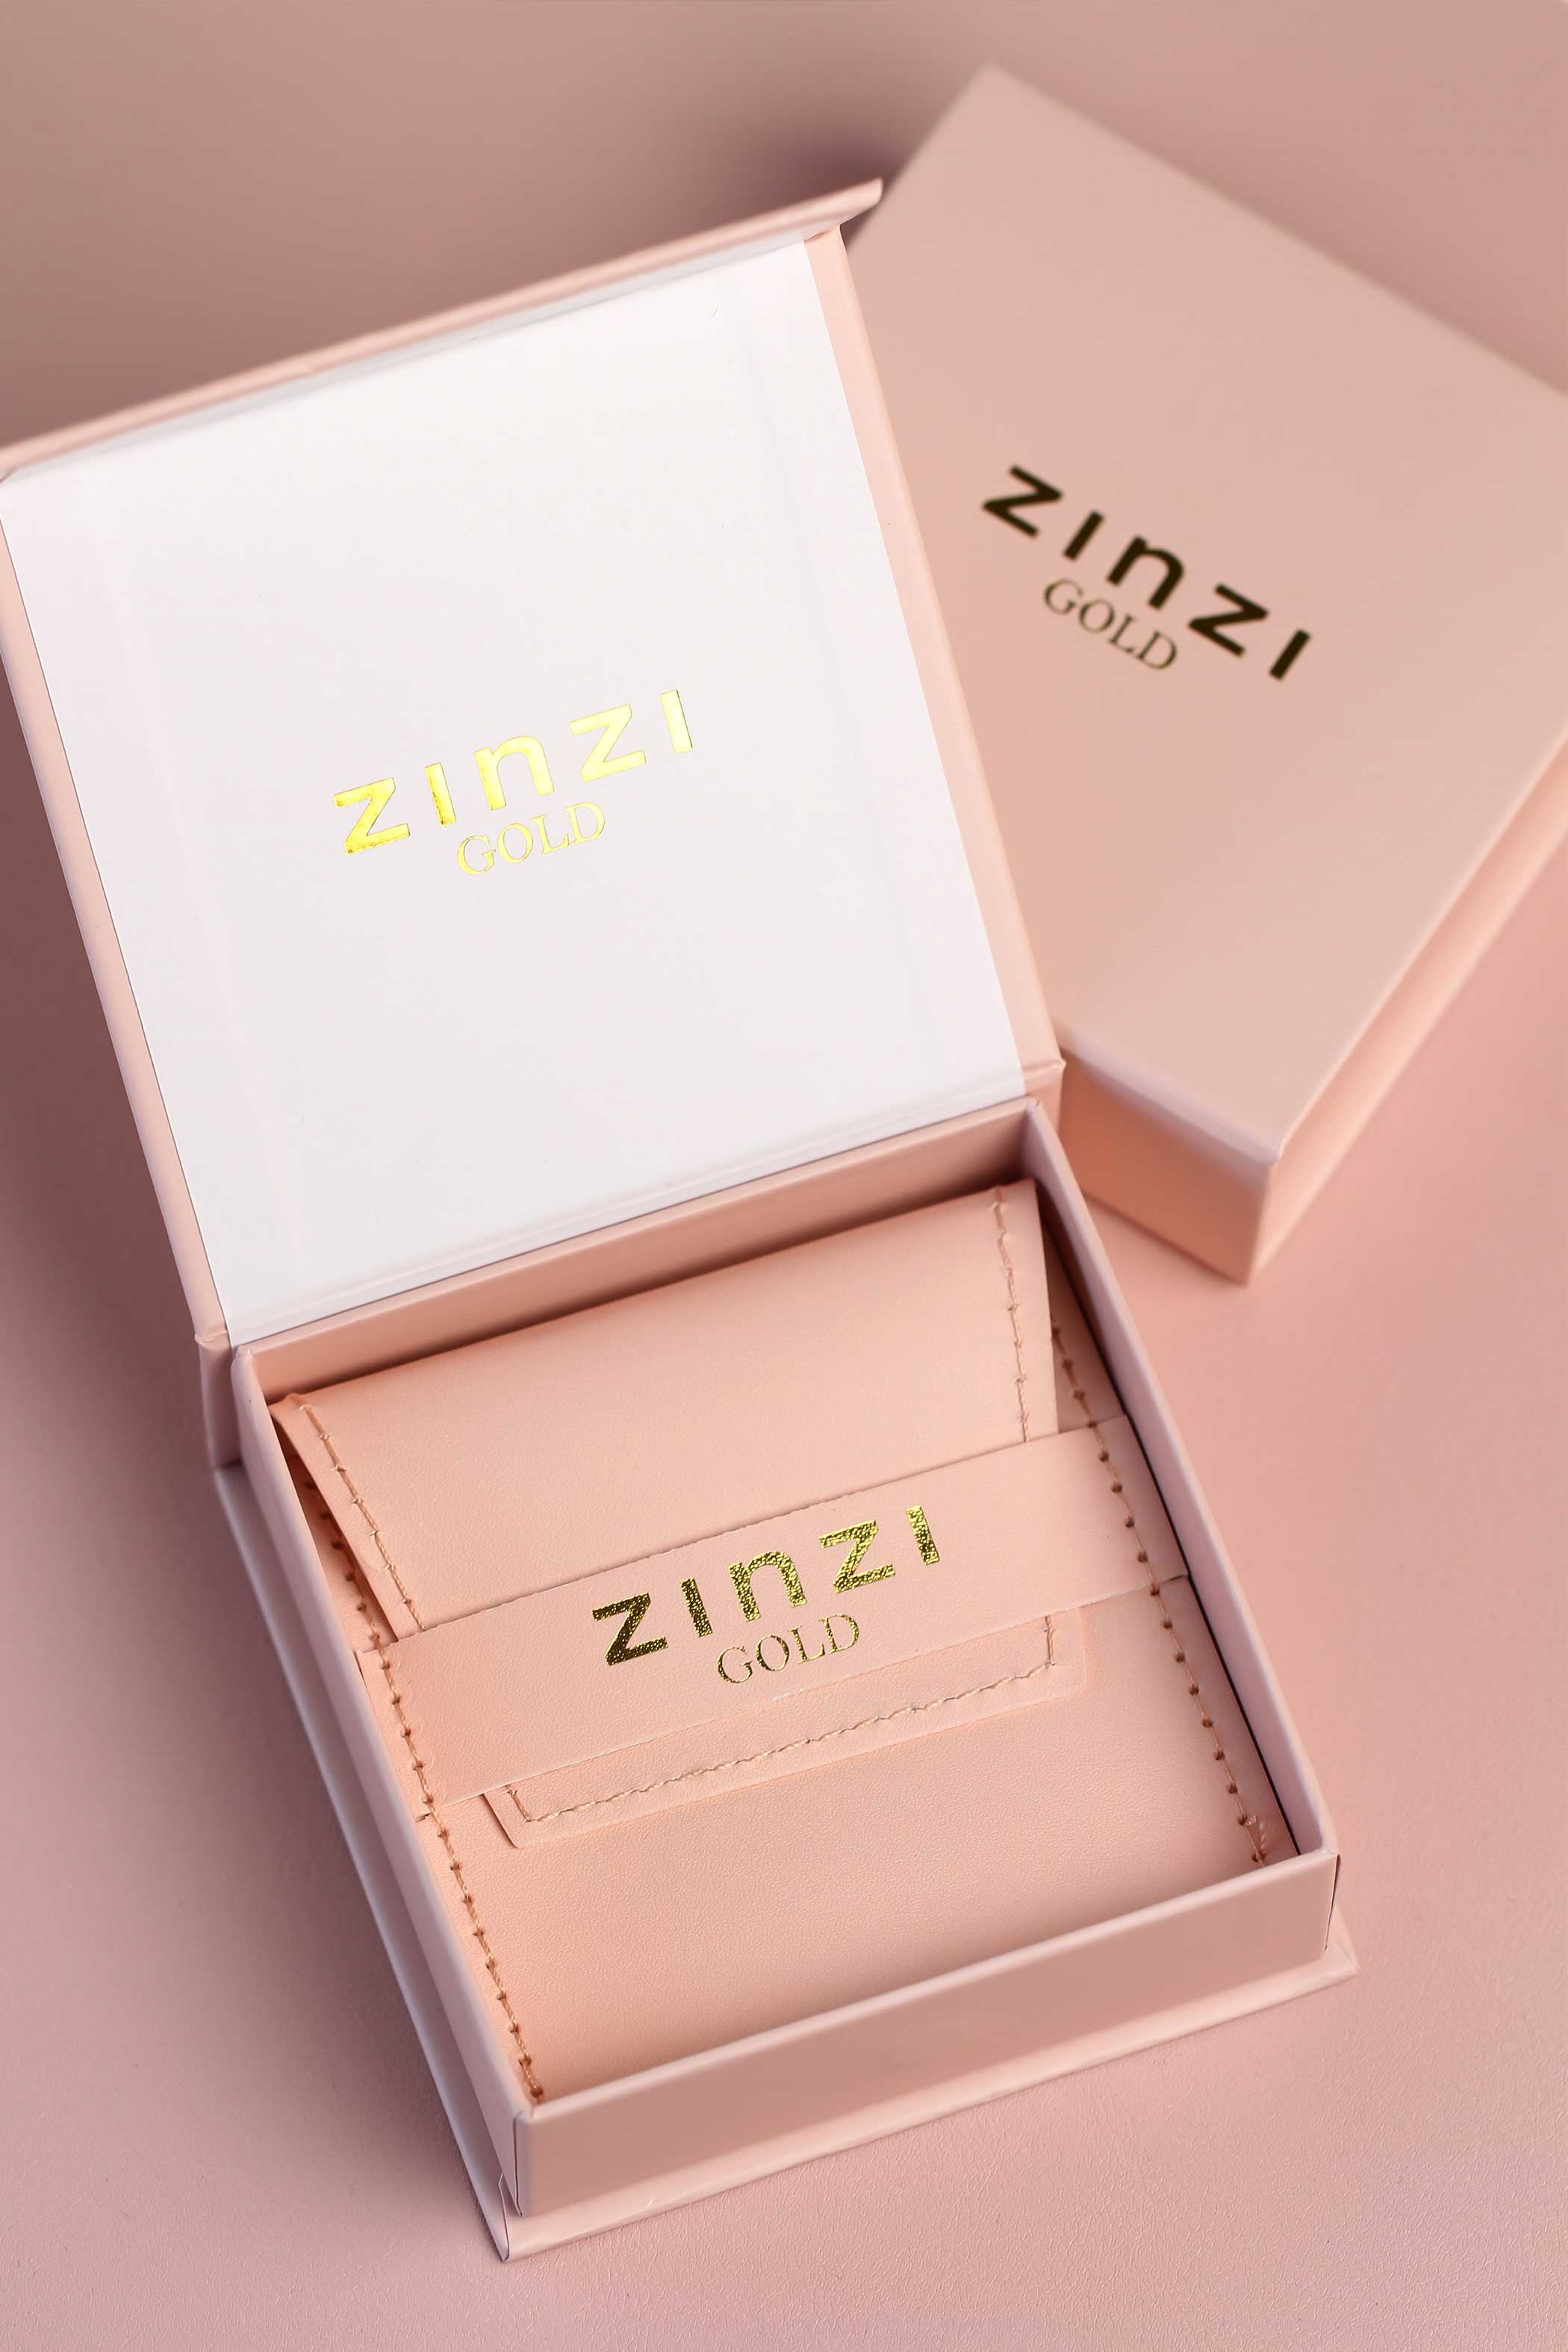 ZINZI 14K Gold Earrings Pendants Drop White Zirconia 7mm ZGCH390 (excl. hoop earrings)